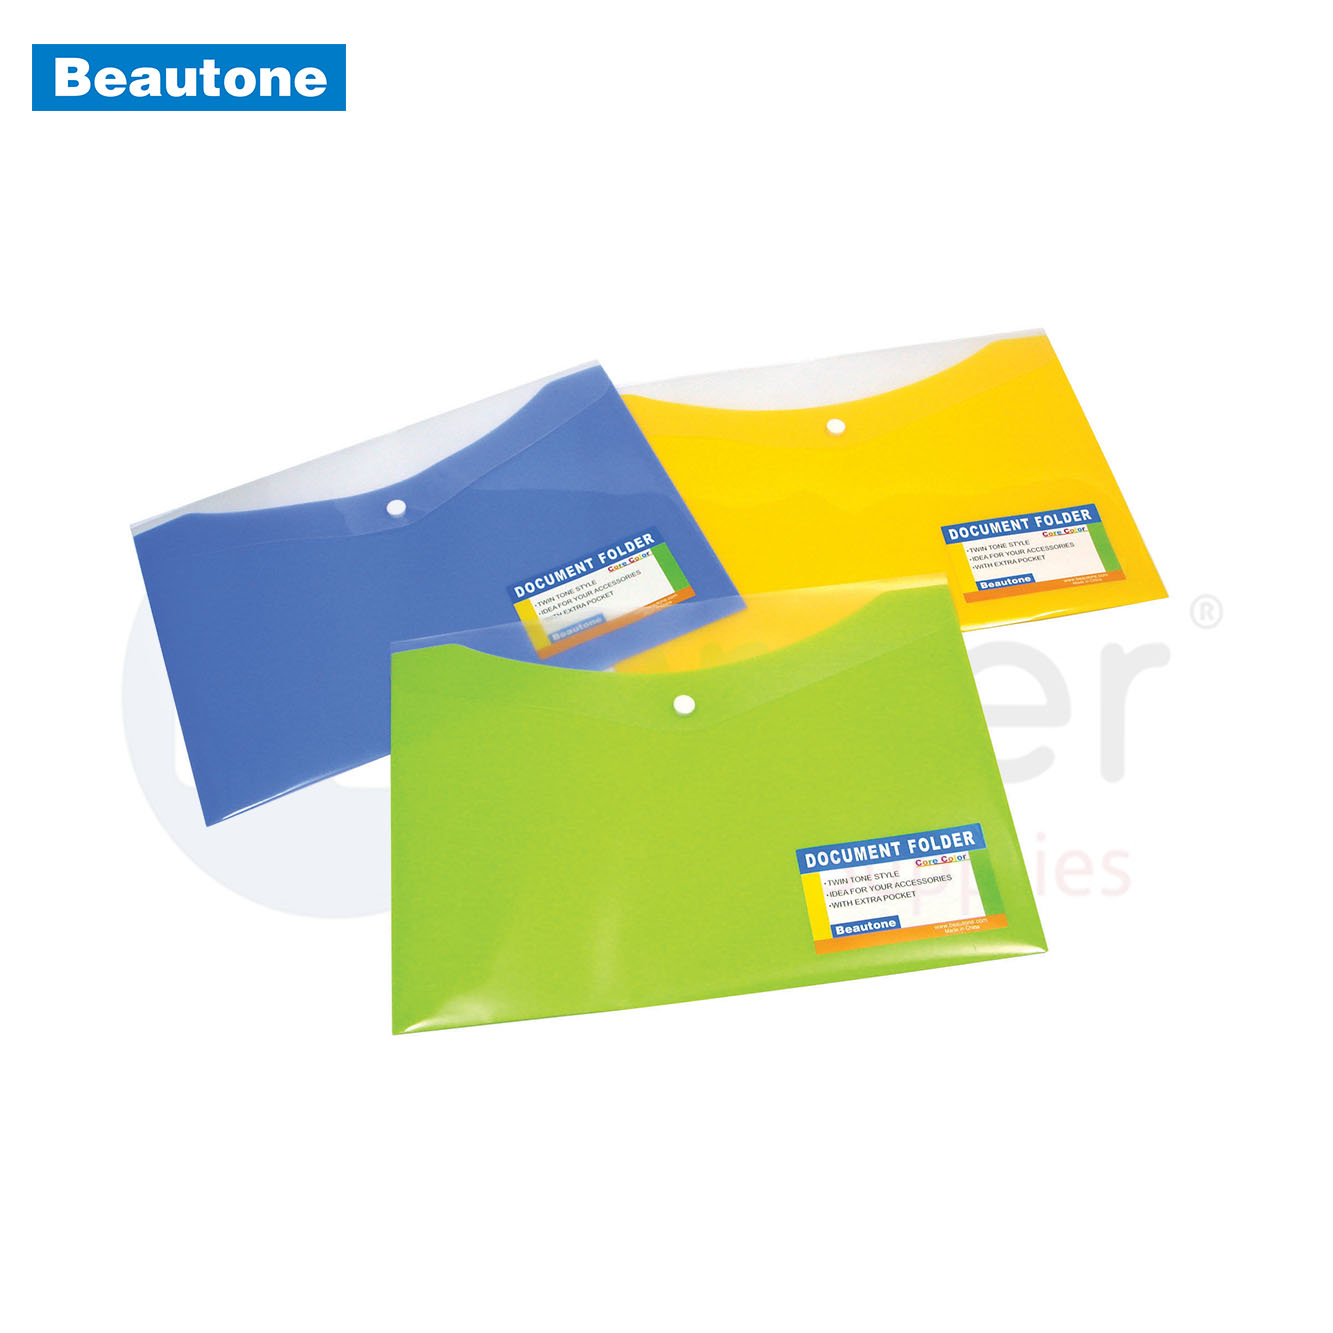 #Beautone Envelopes bag twintone w/extra pocket